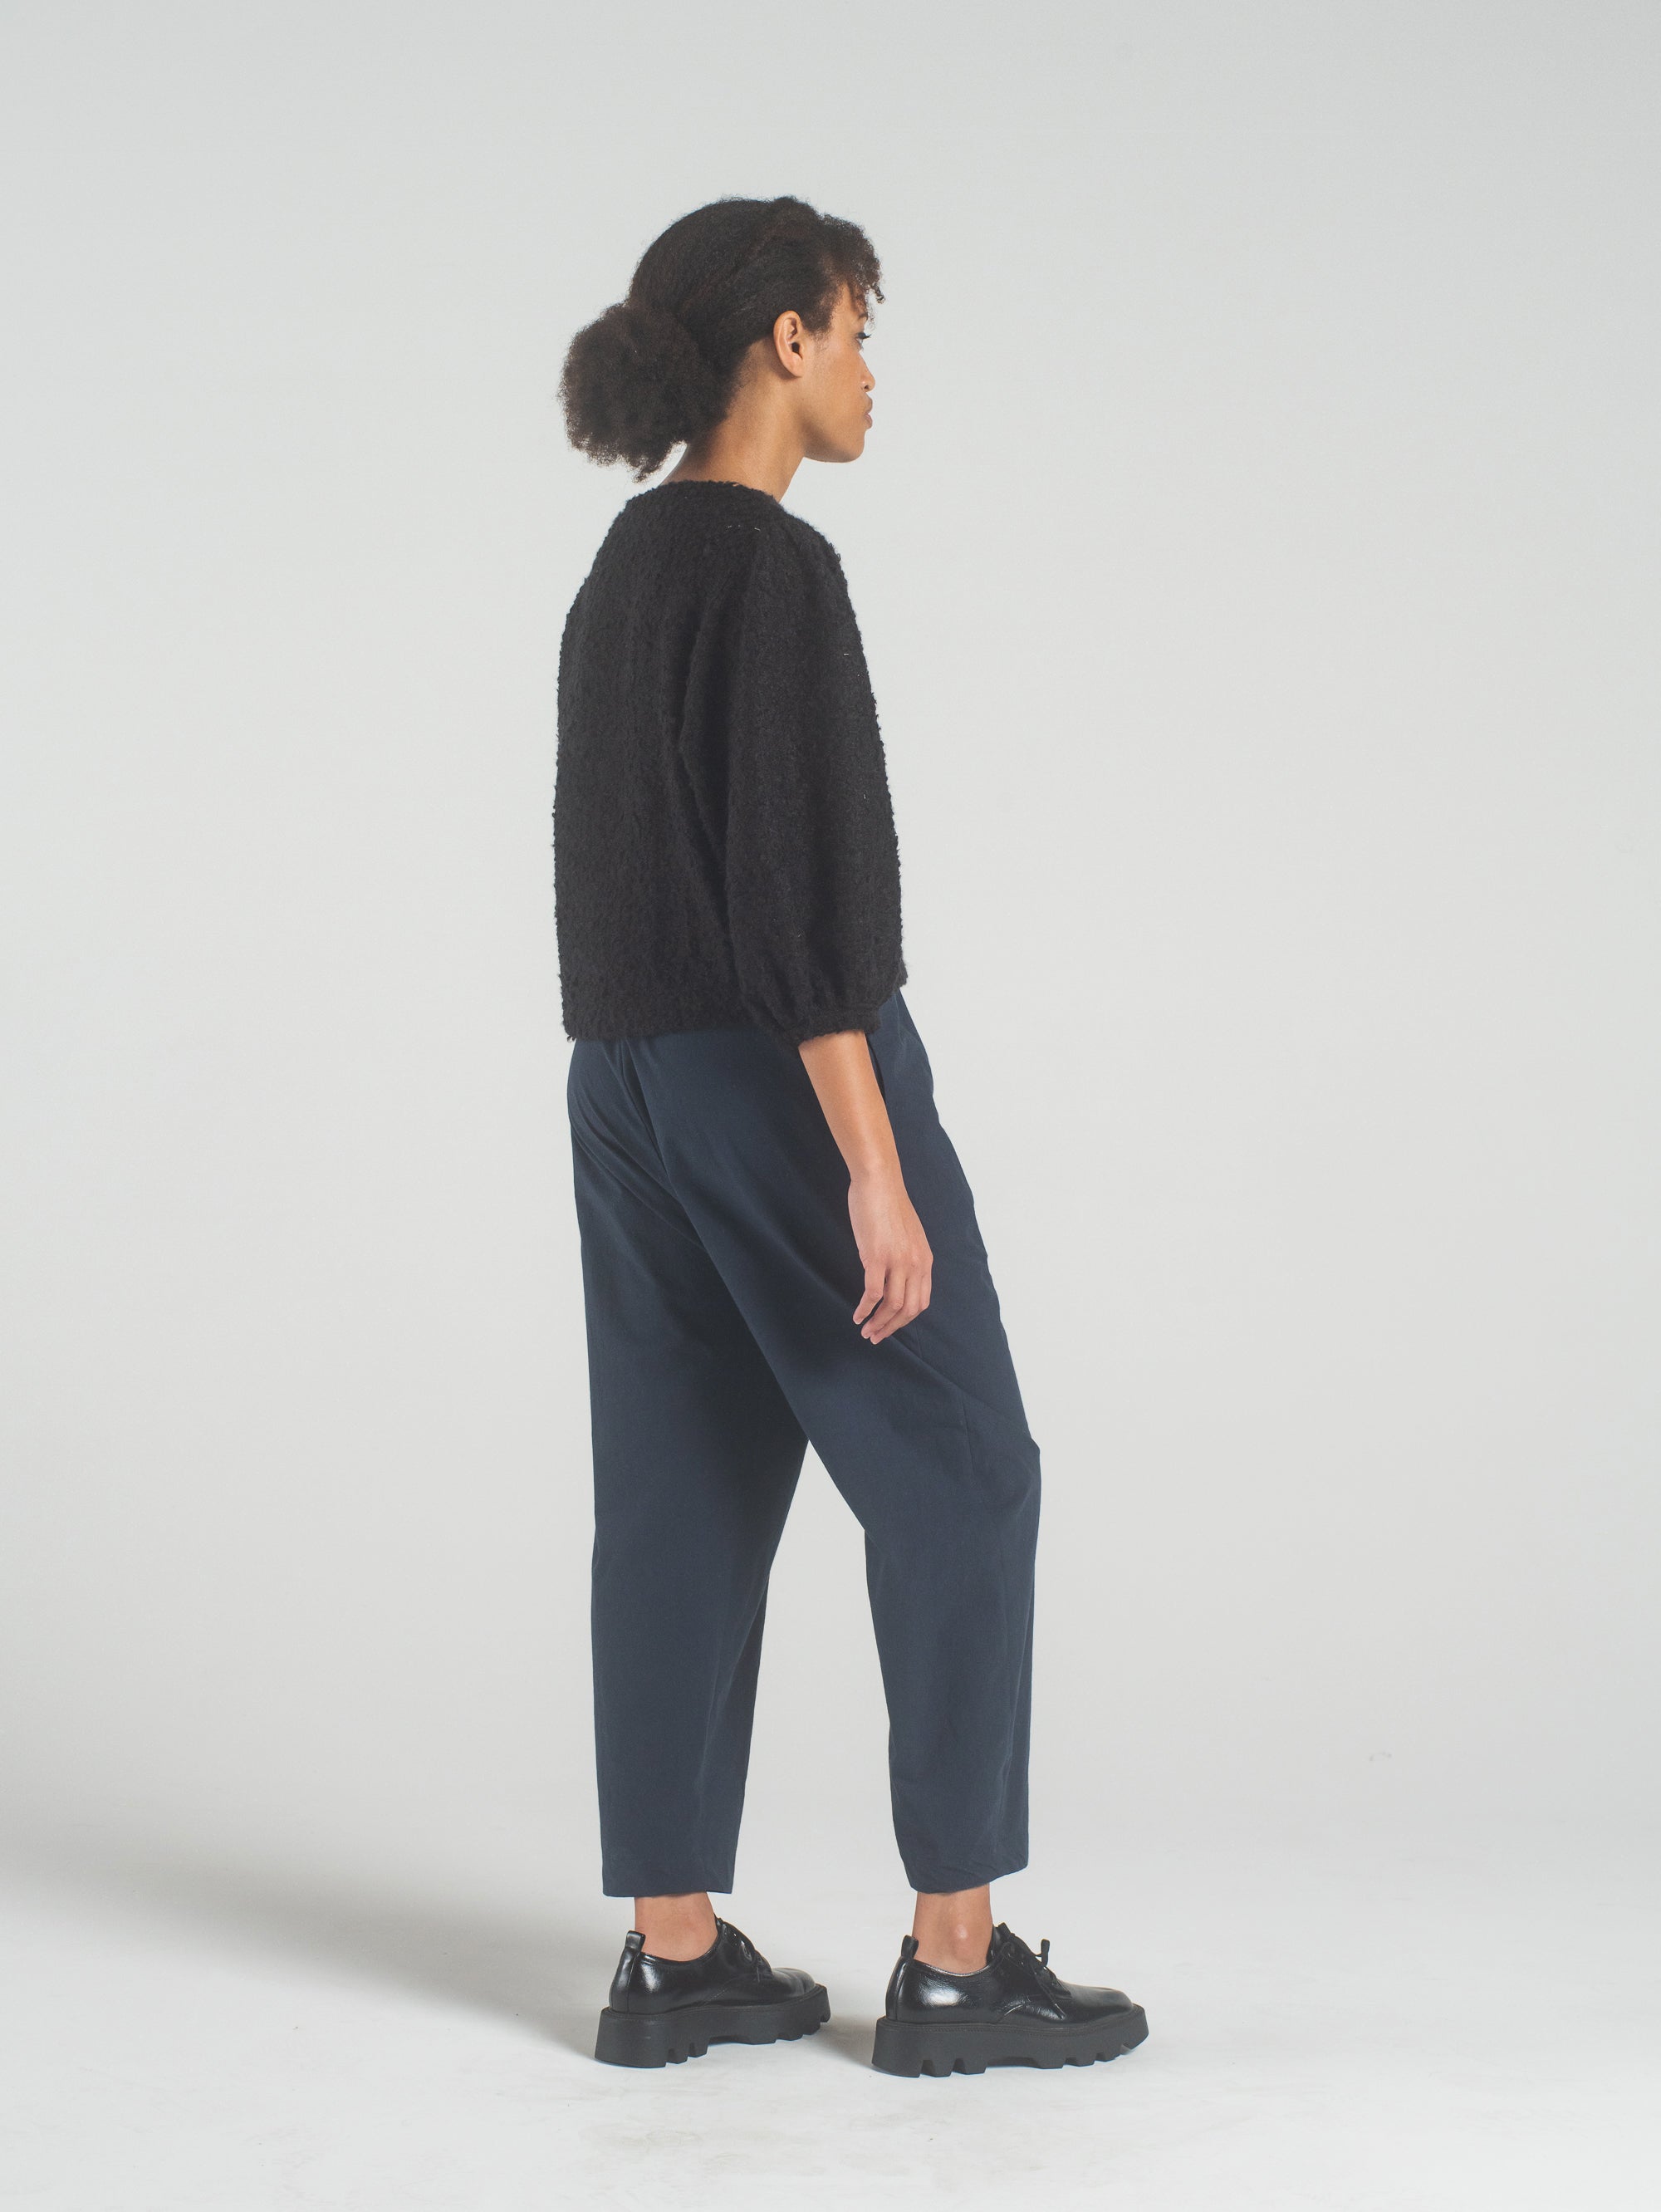 SAMPLE SALE - Dasha Sweater in Black Boucle - SMALL